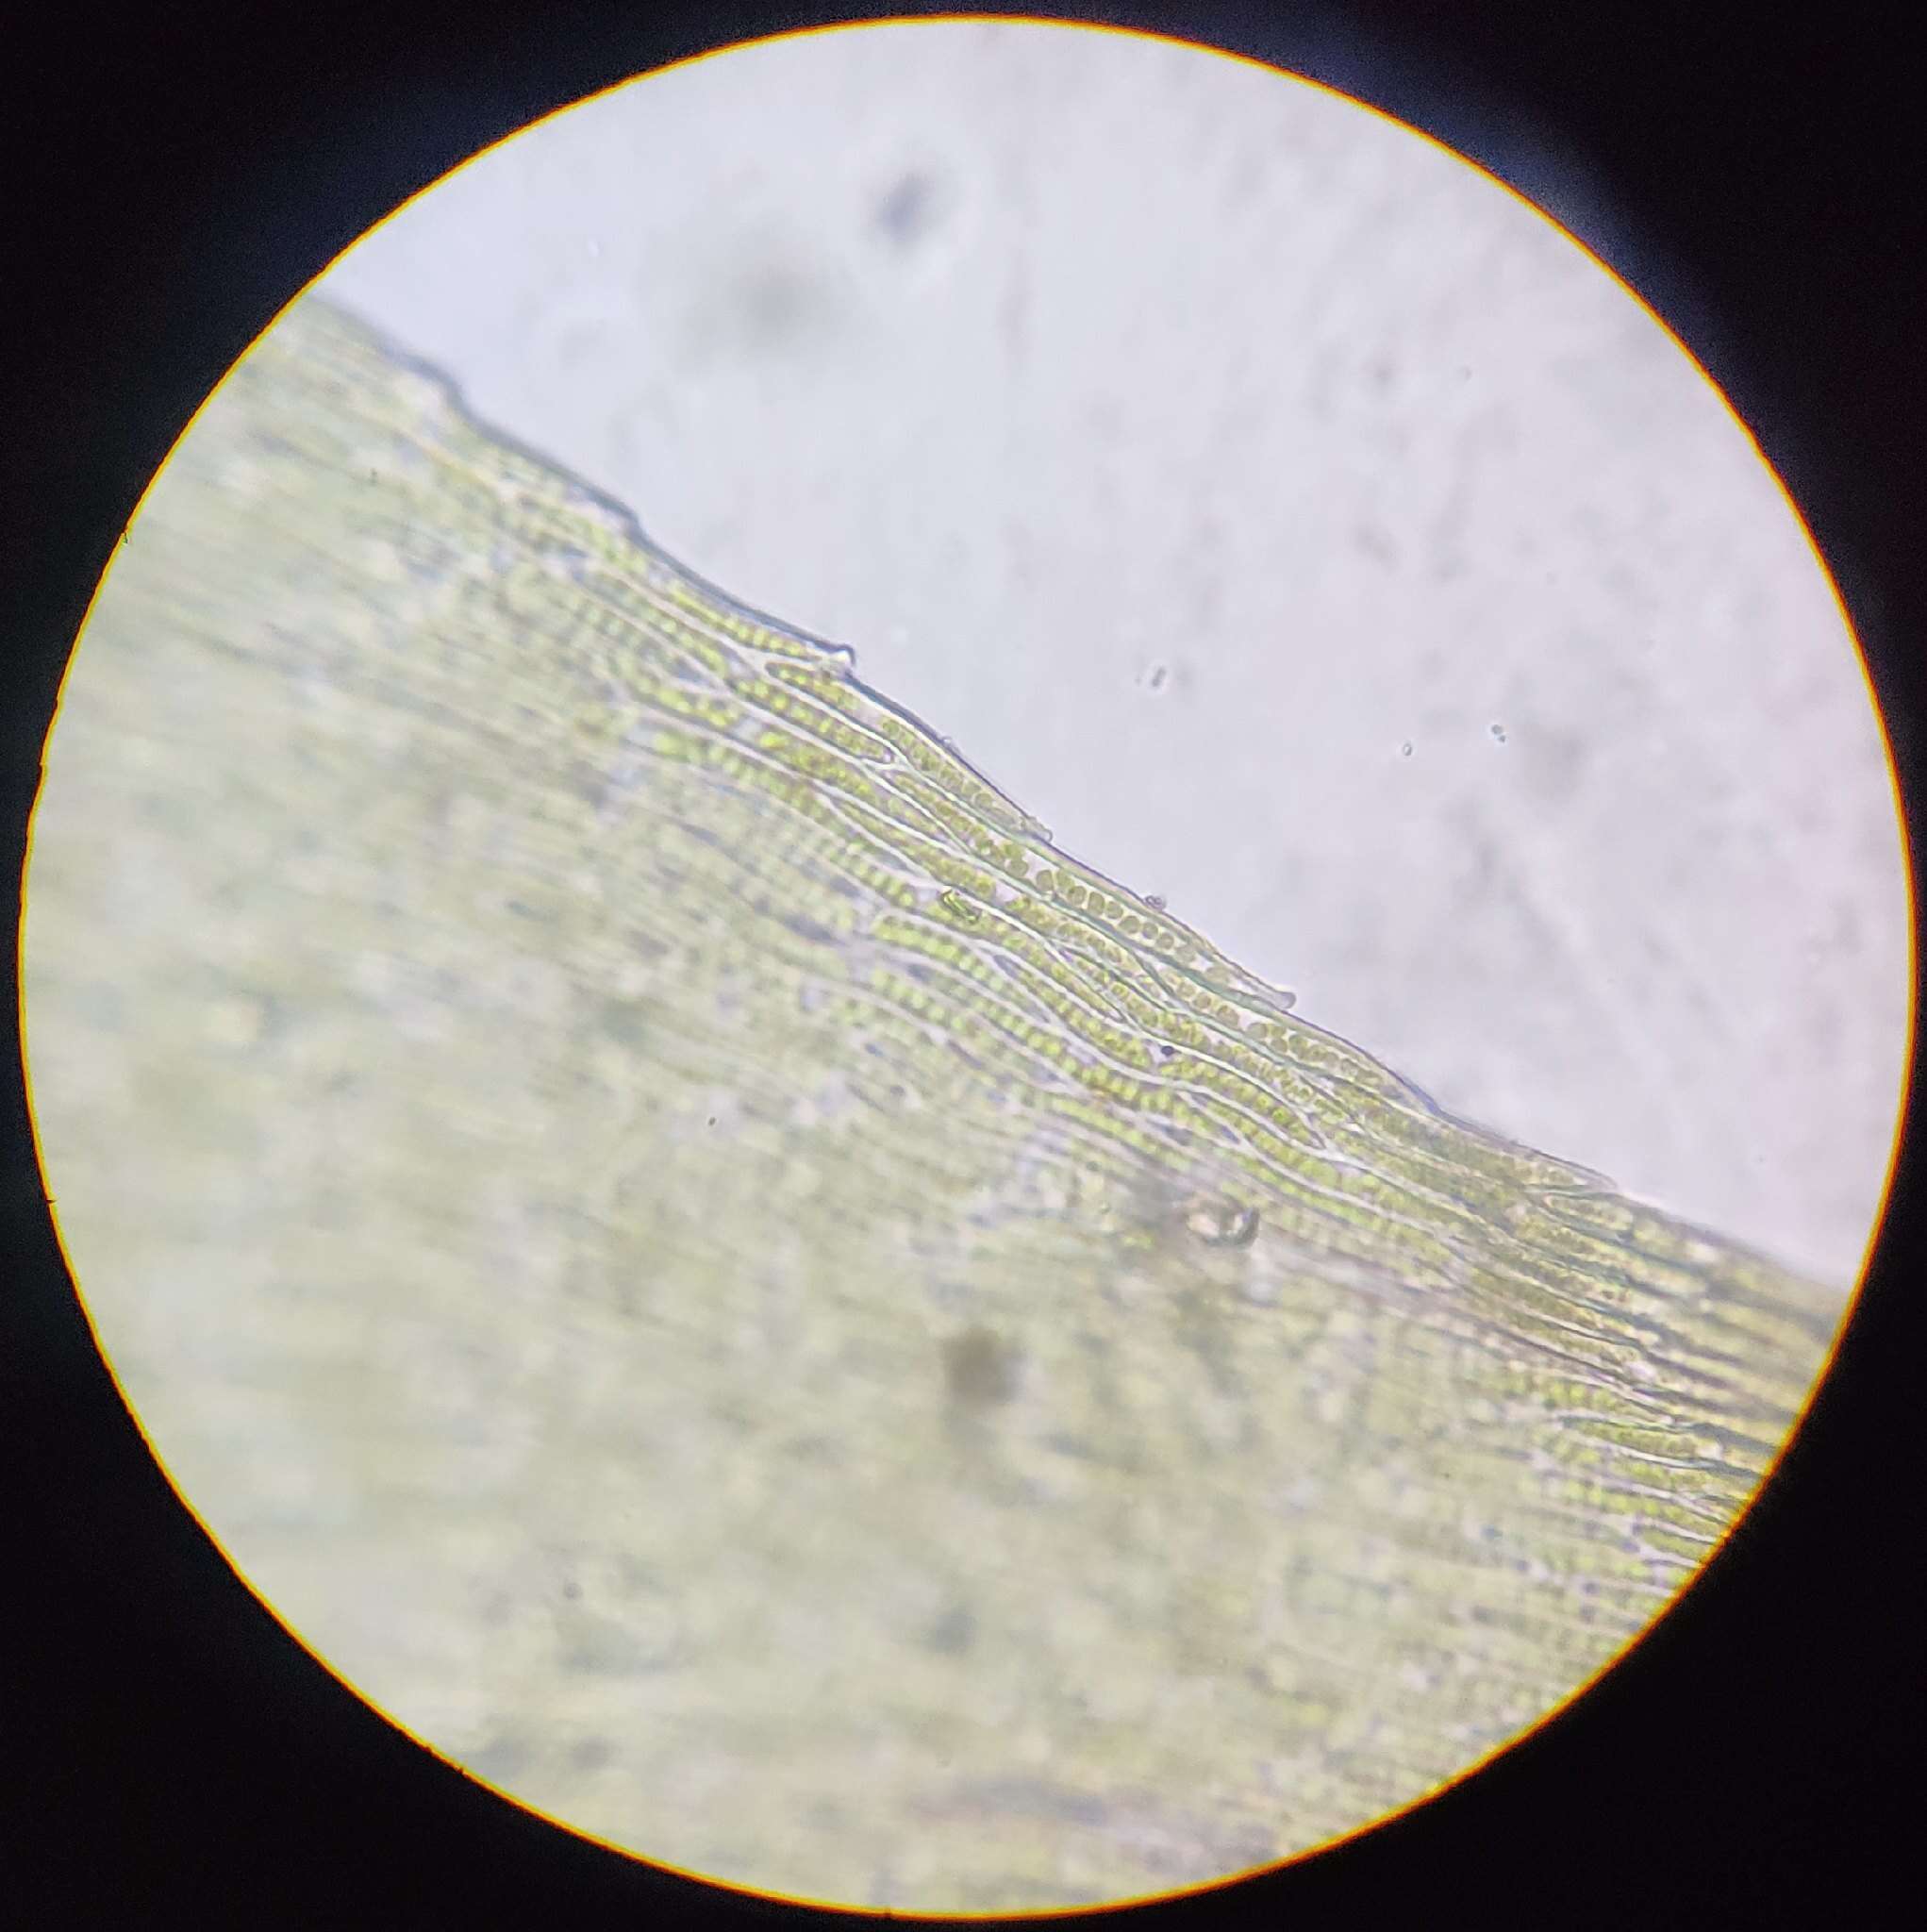 Image of herzogiella moss